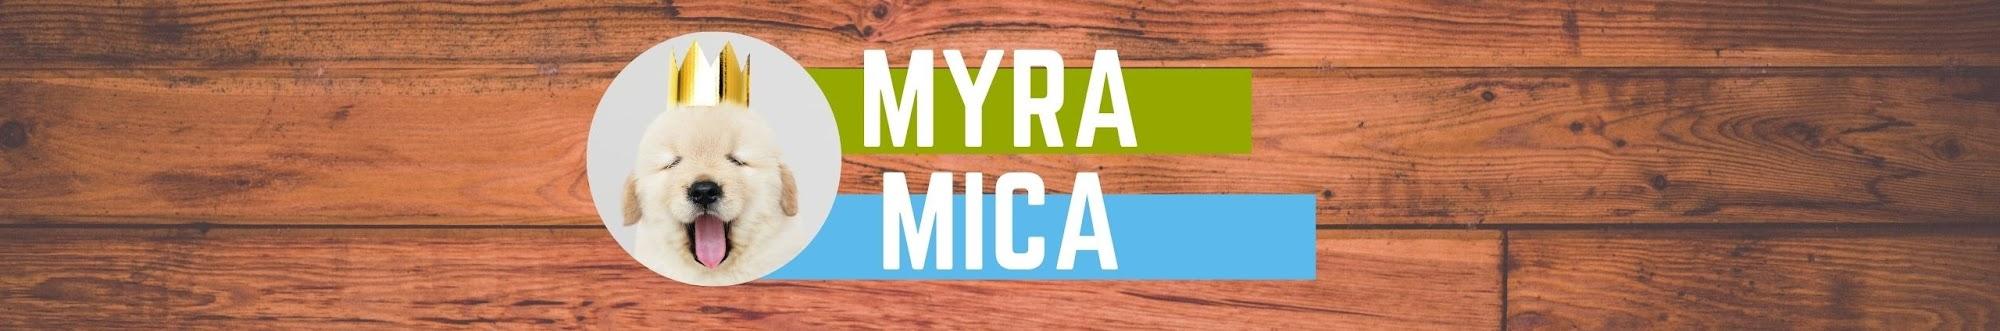 Myra Mica